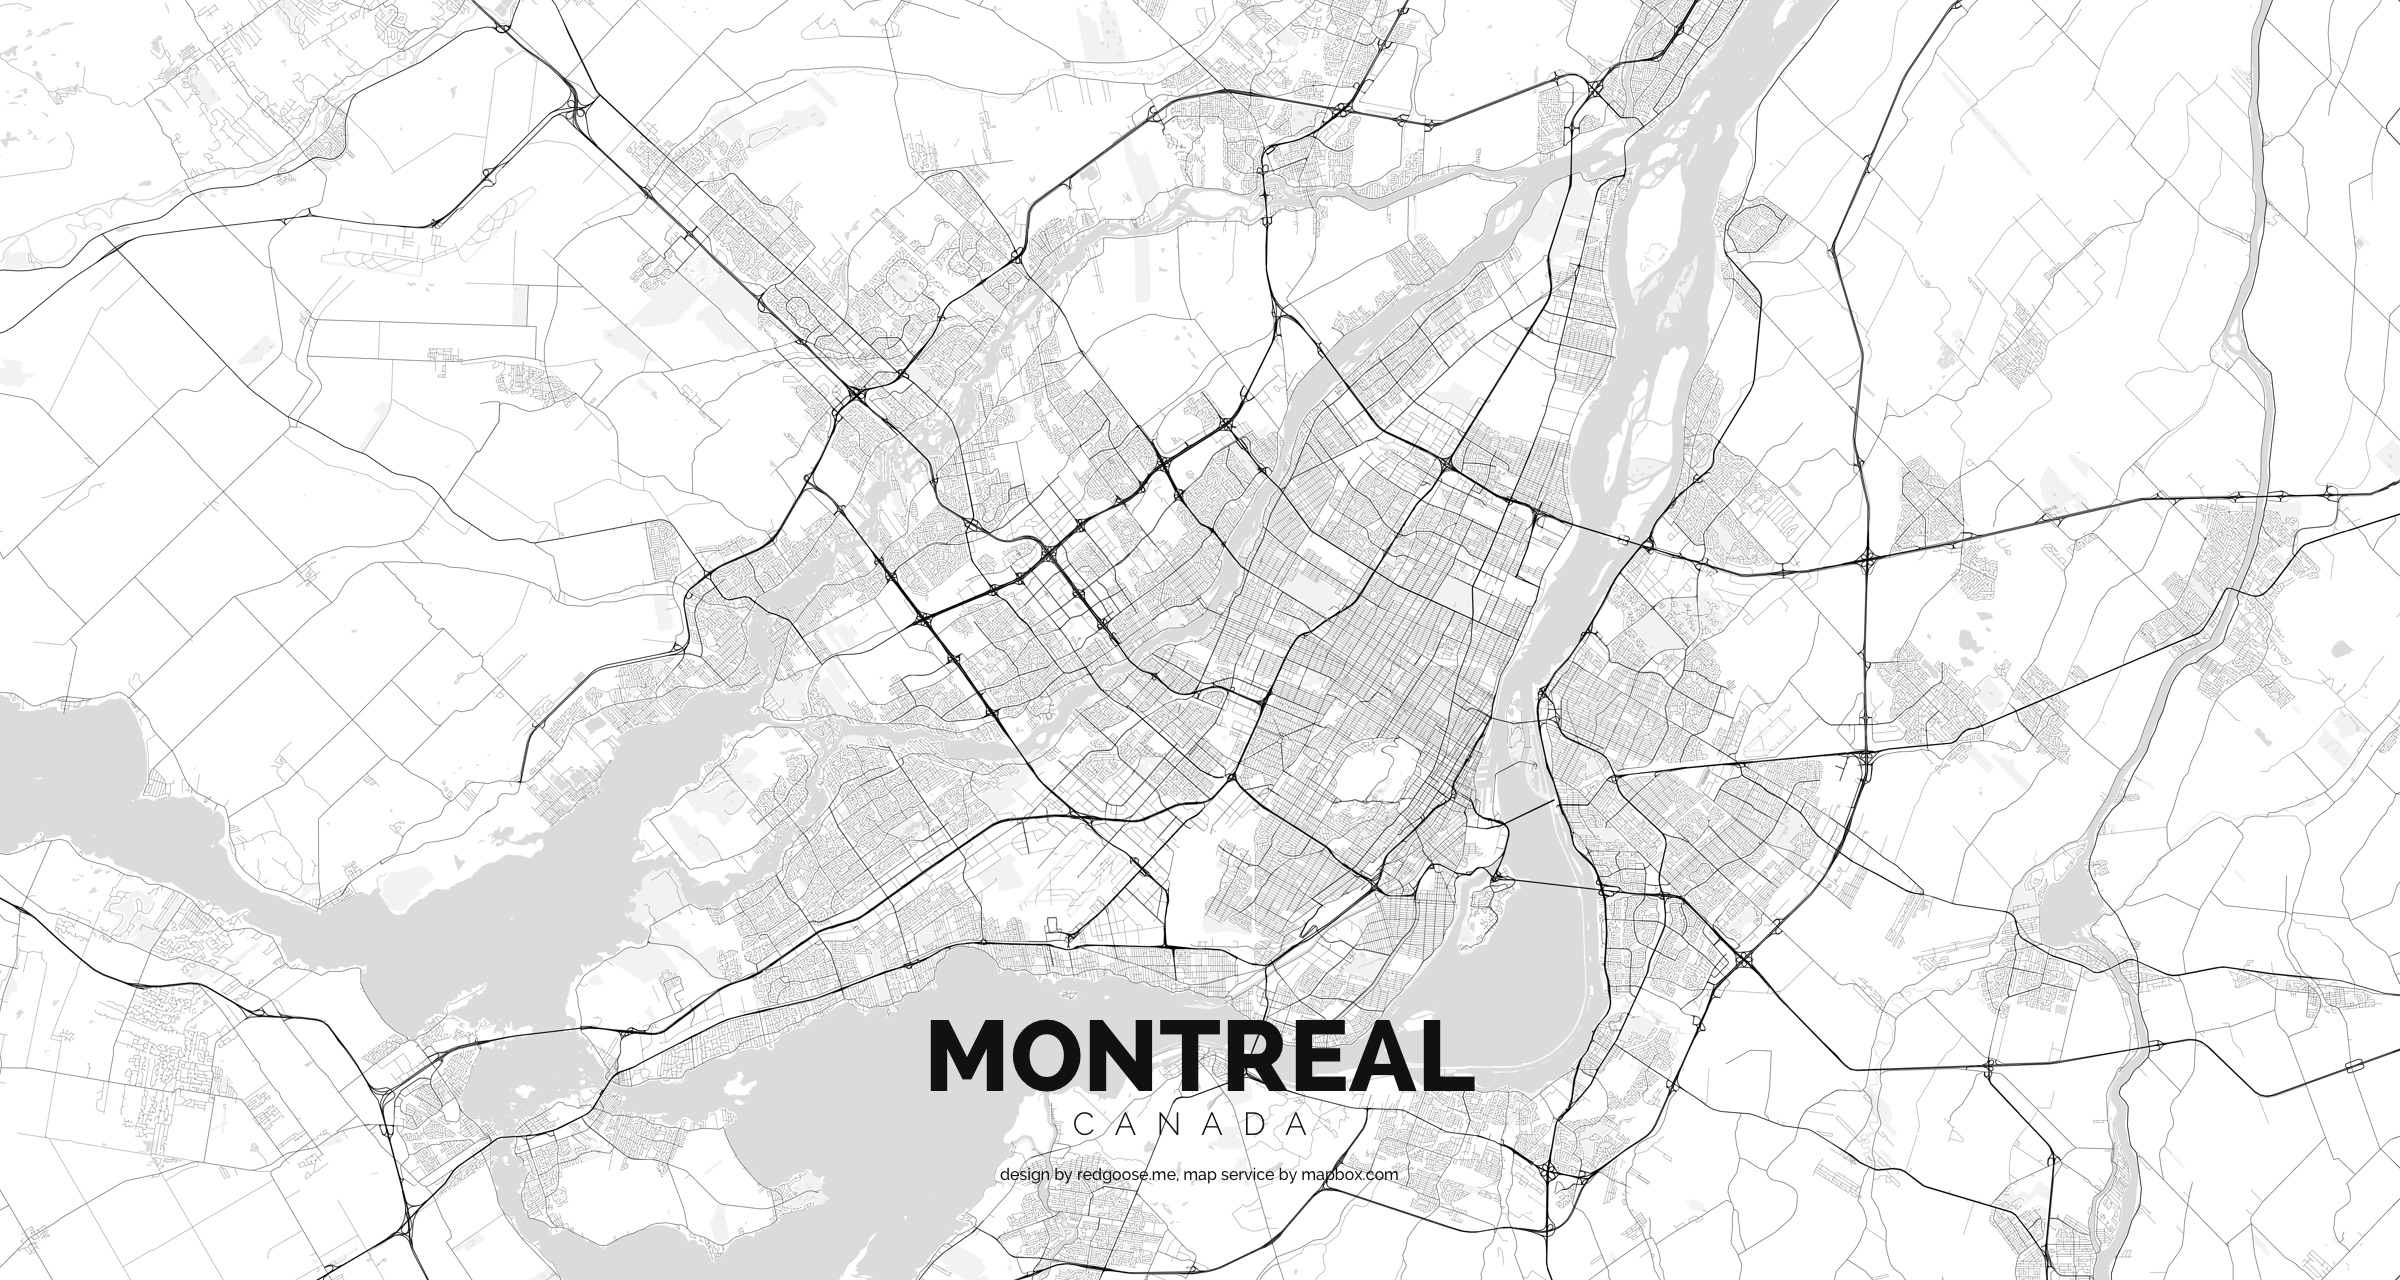 Canada_-_Montreal.jpg